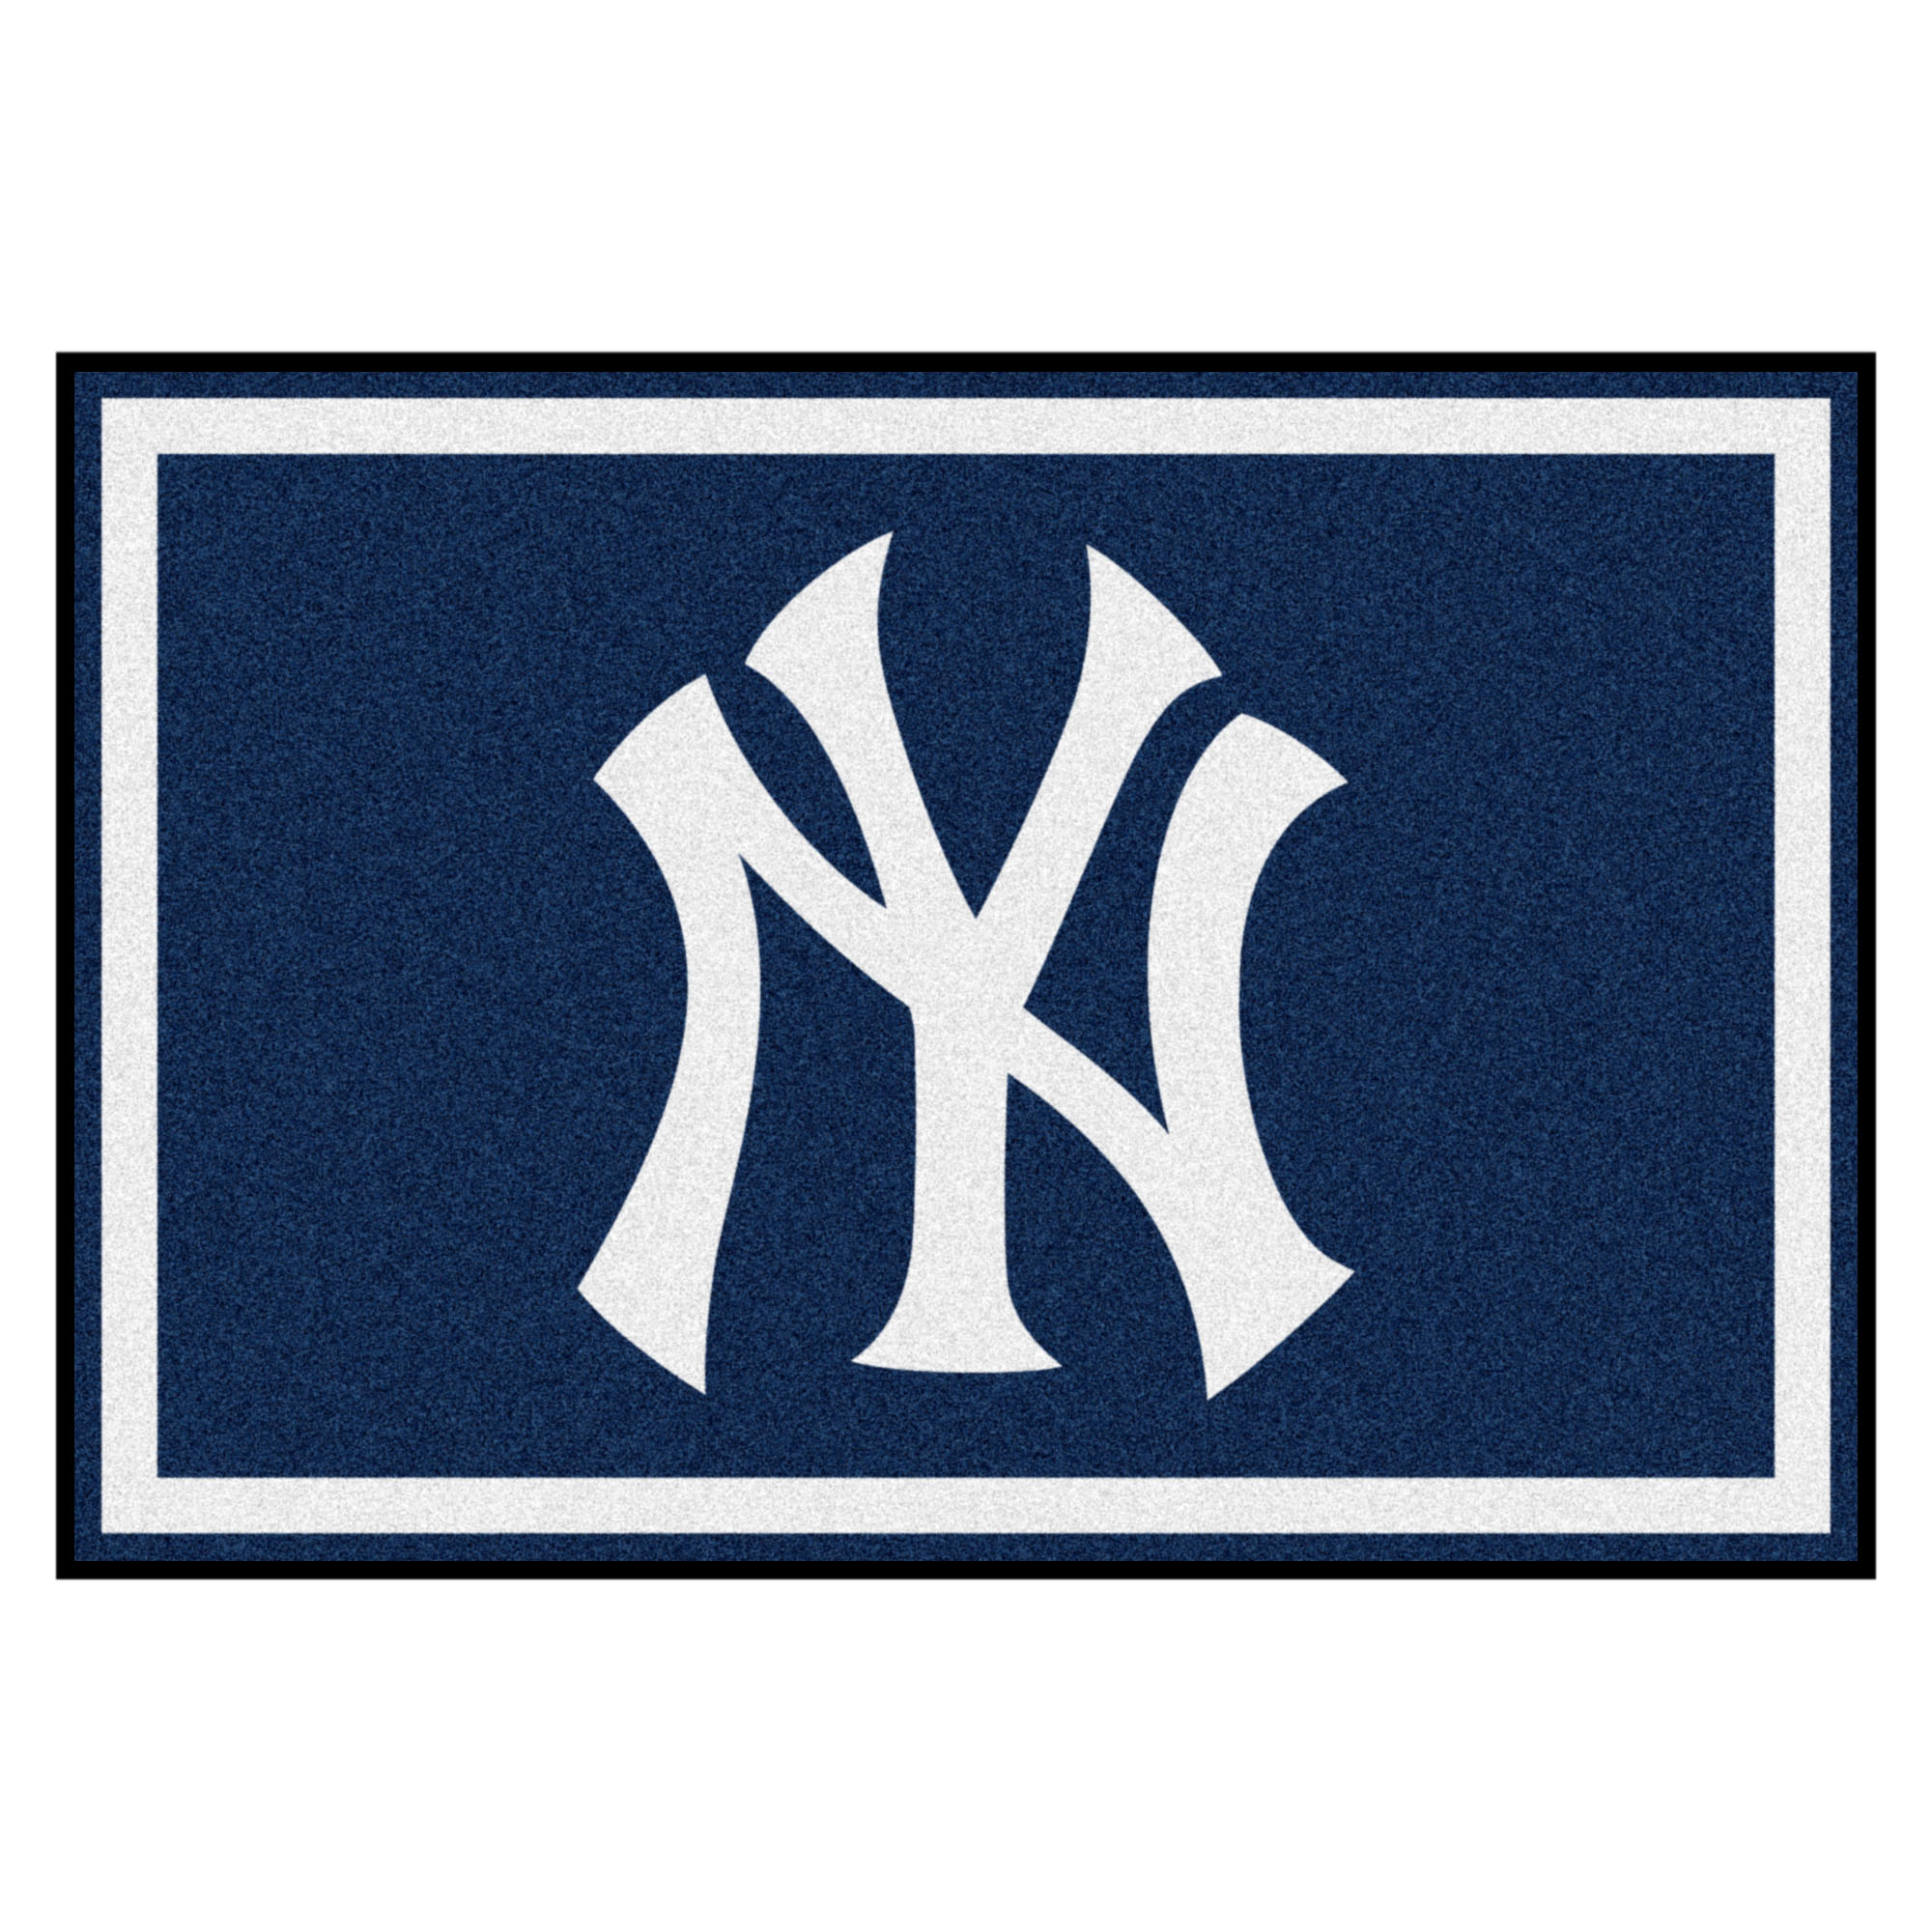 MLB - New York Yankees 5'x8' Rug - image 1 of 2